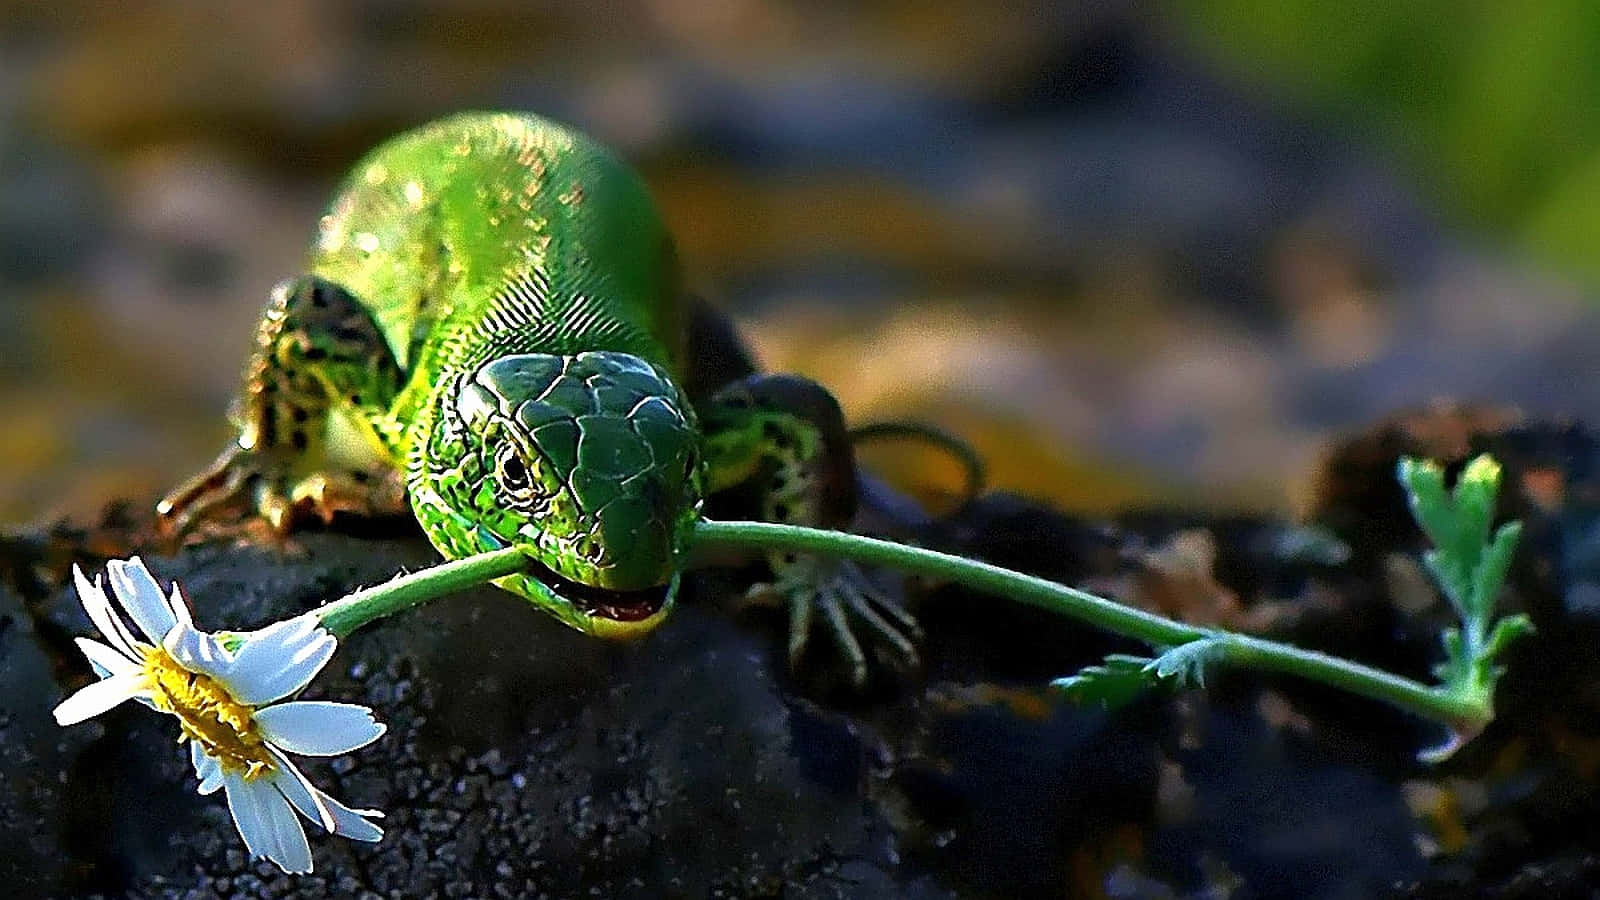 Green Lizard Reptile Bitting Flower Blur Background